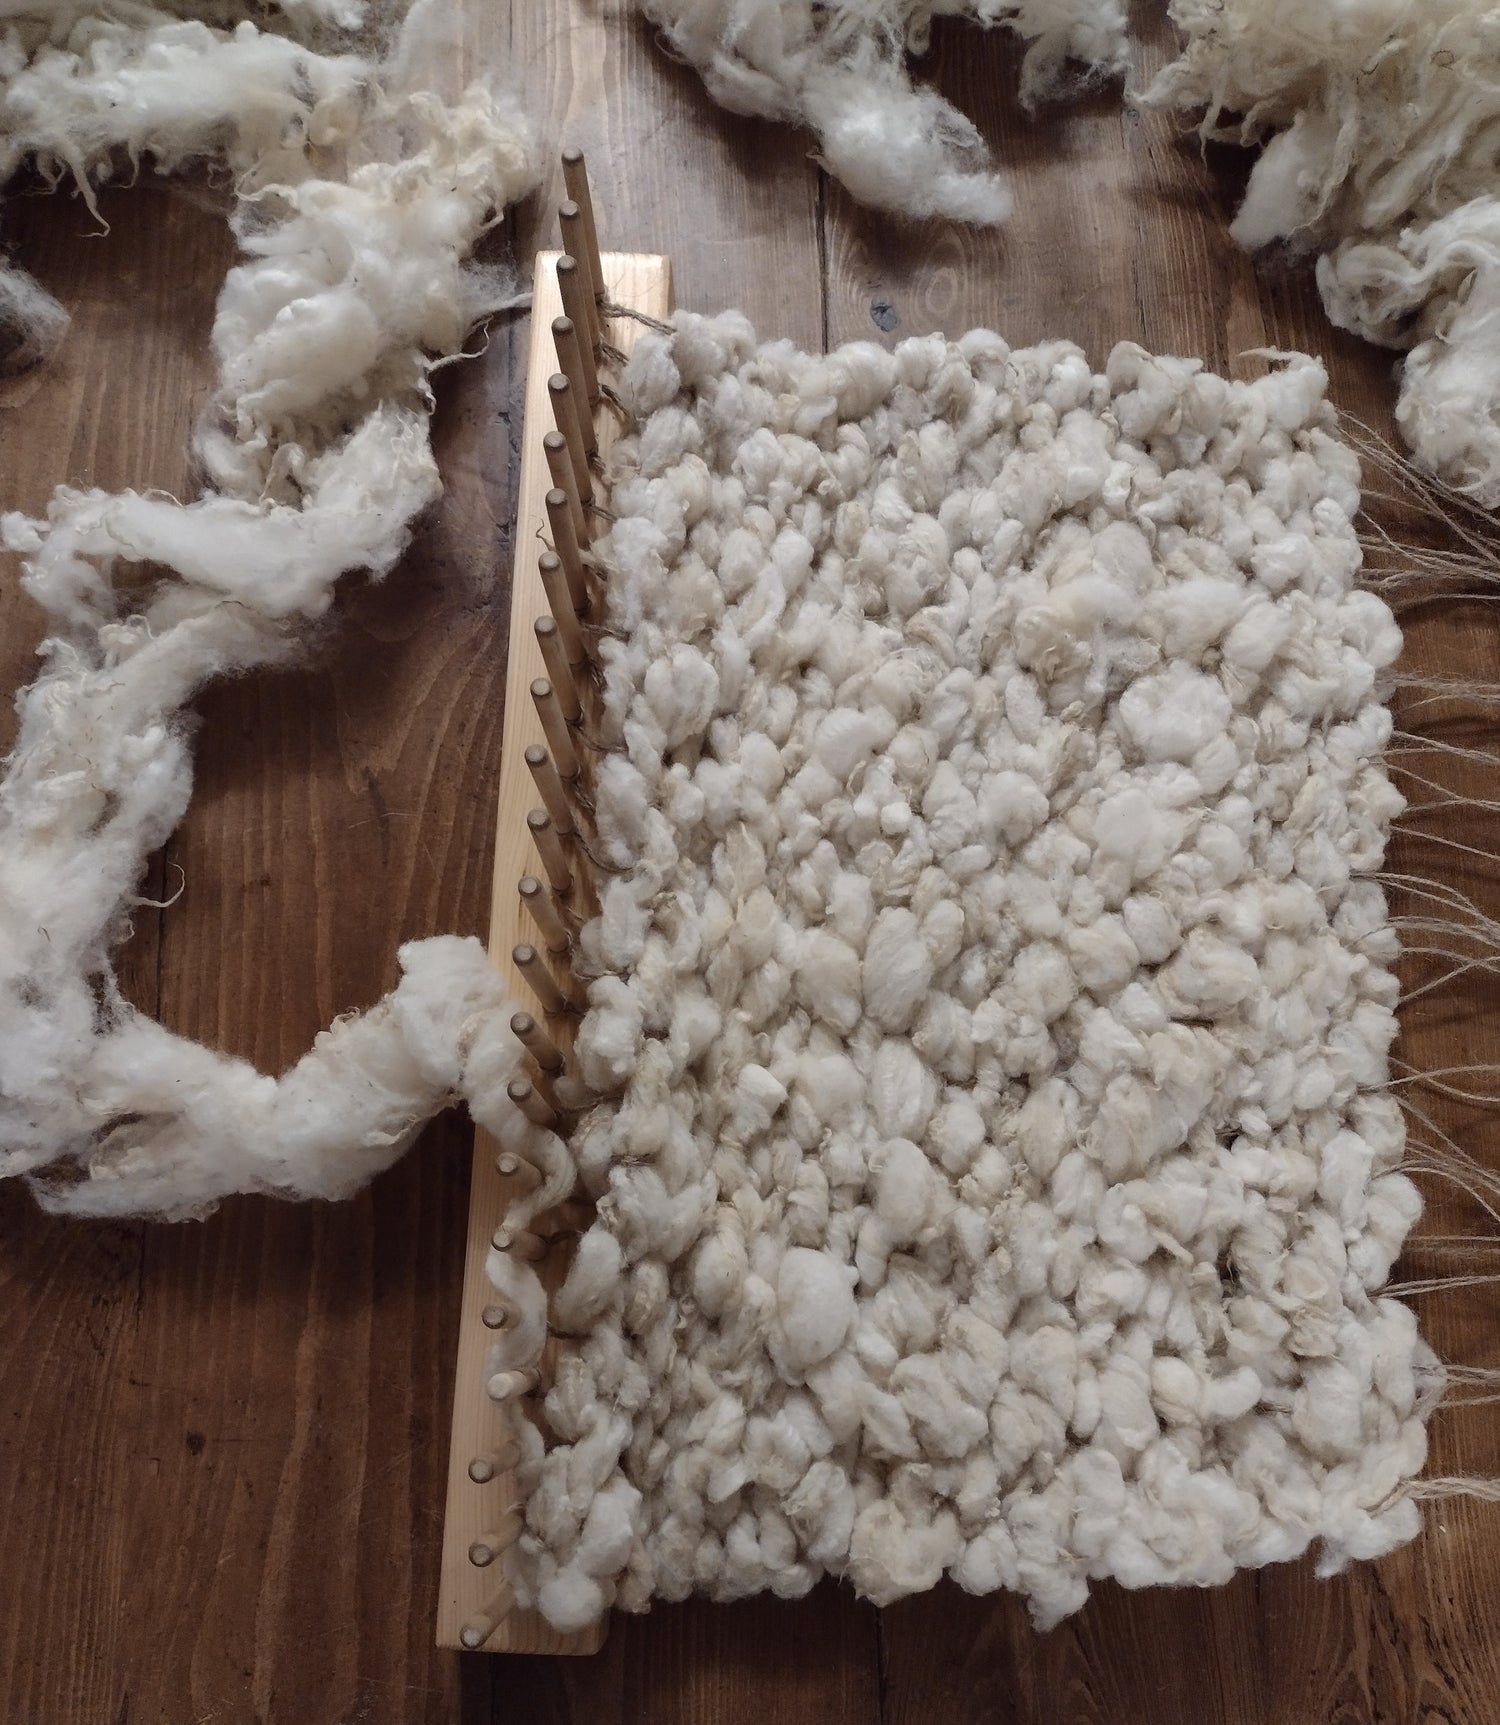 Whitefaced Woodland sheep wool fleece, handmade wool products, peg loom weaving